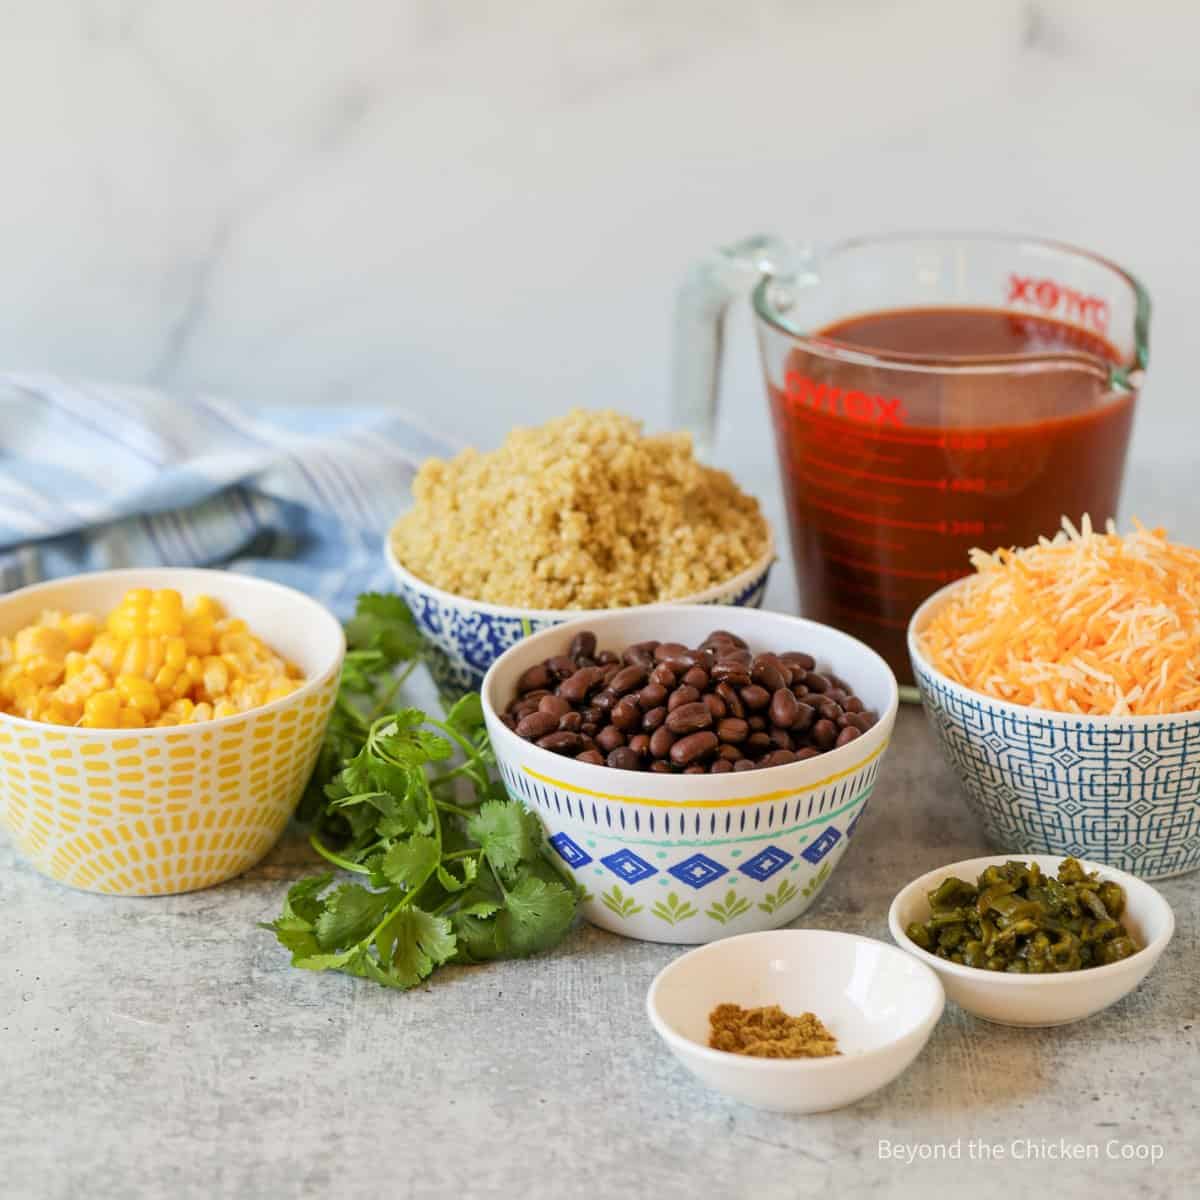 Ingredients for making quinoa enchilada bake.